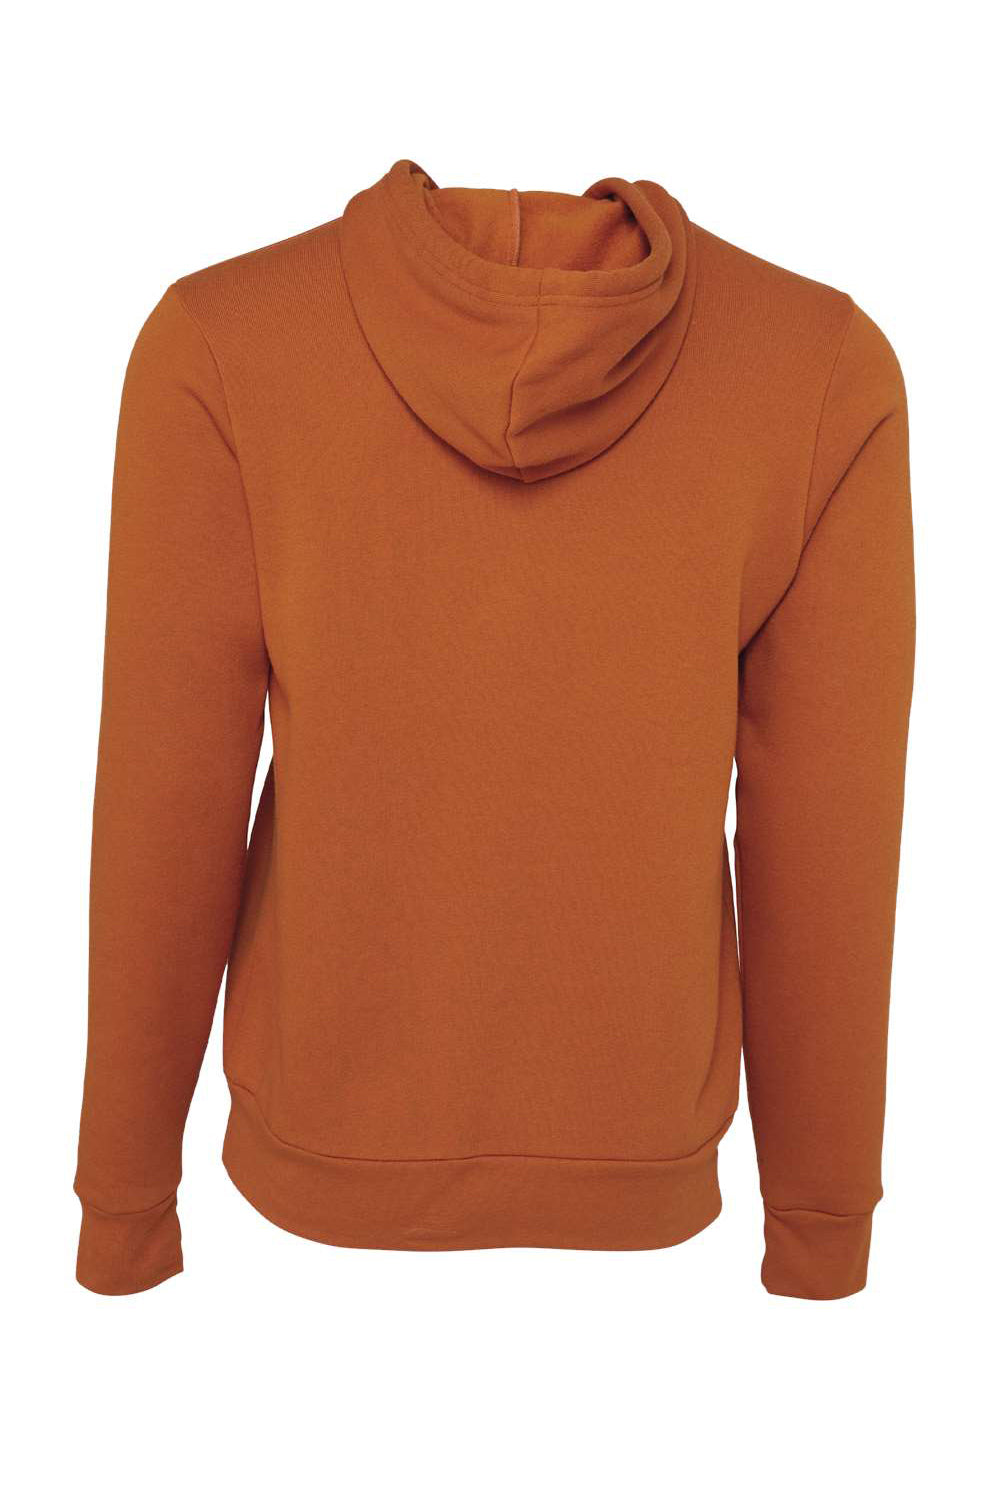 Bella + Canvas BC3719/3719 Mens Sponge Fleece Hooded Sweatshirt Hoodie Autumn Orange Flat Back